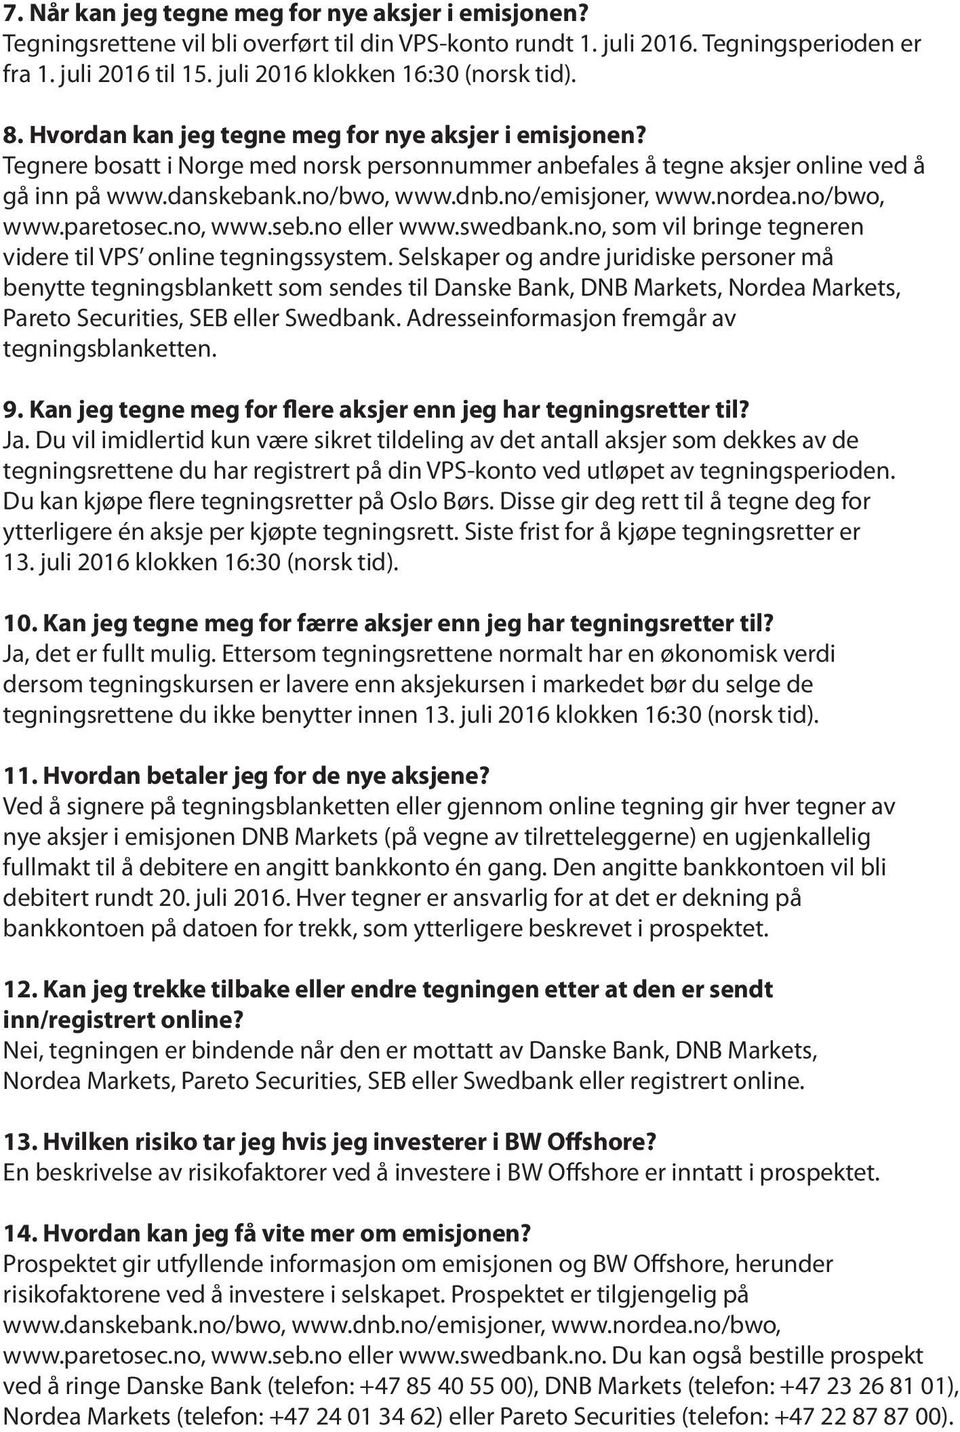 danskebank.no/bwo, www.dnb.no/emisjoner, www.nordea.no/bwo, www.paretosec.no, www.seb.no eller www.swedbank.no, som vil bringe tegneren videre til VPS online tegningssystem.